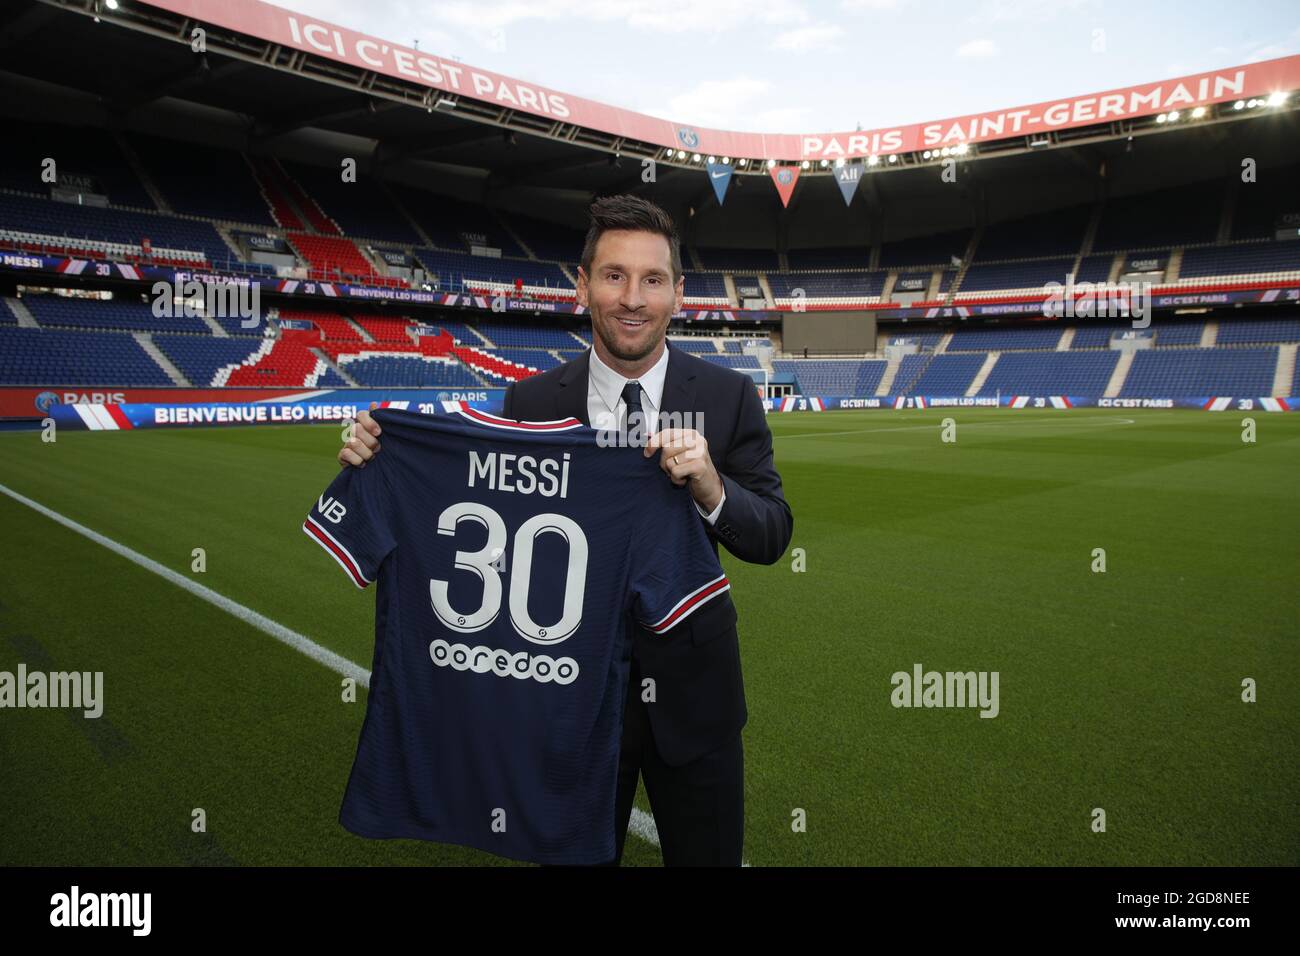 Paris France 10.8.2021, Football: French Ligue 1 club Paris St Germain presents new player Lionel Messi  Photo: PSG via Kolvenbach Stock Photo